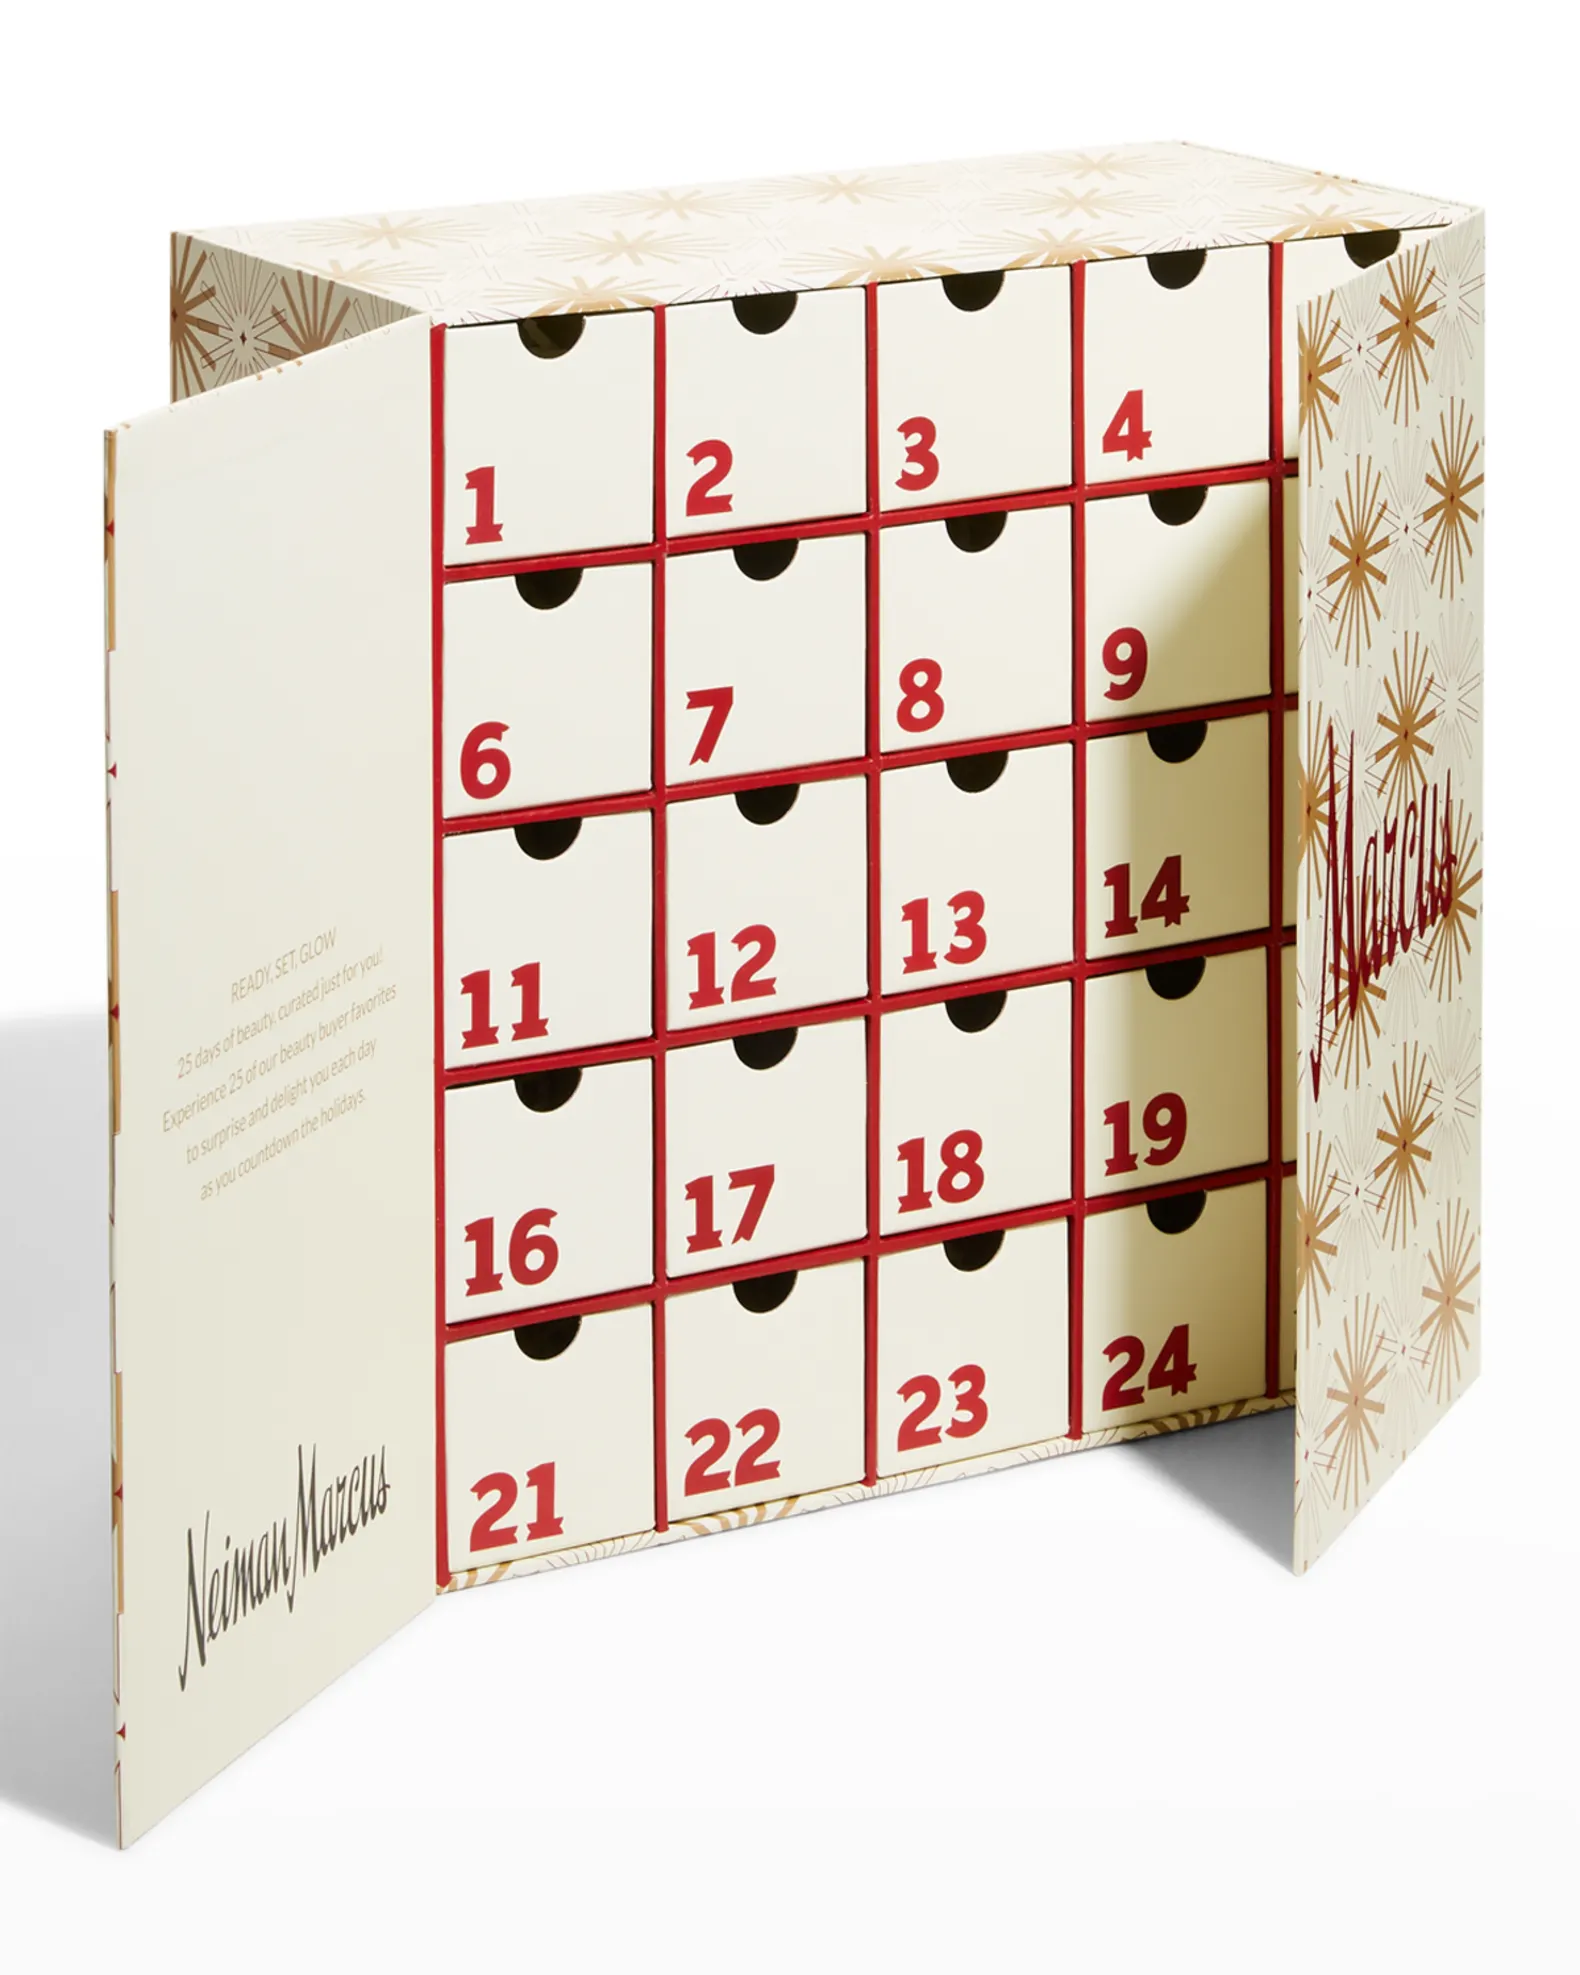 Neiman Marcus Beauty Advent Calendar: 25 Days of Beauty Hello